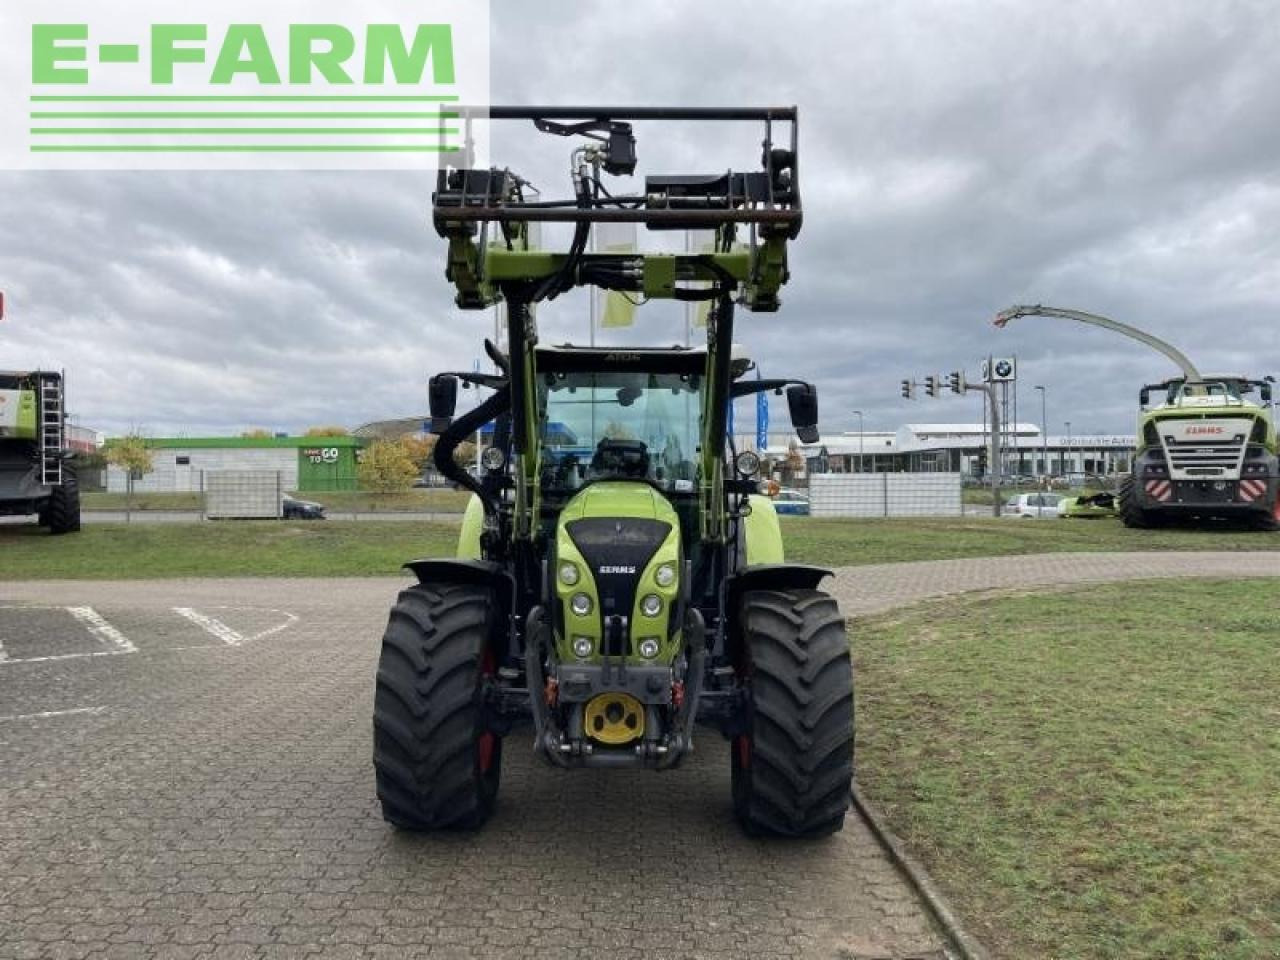 Farm tractor CLAAS atos 330 stage